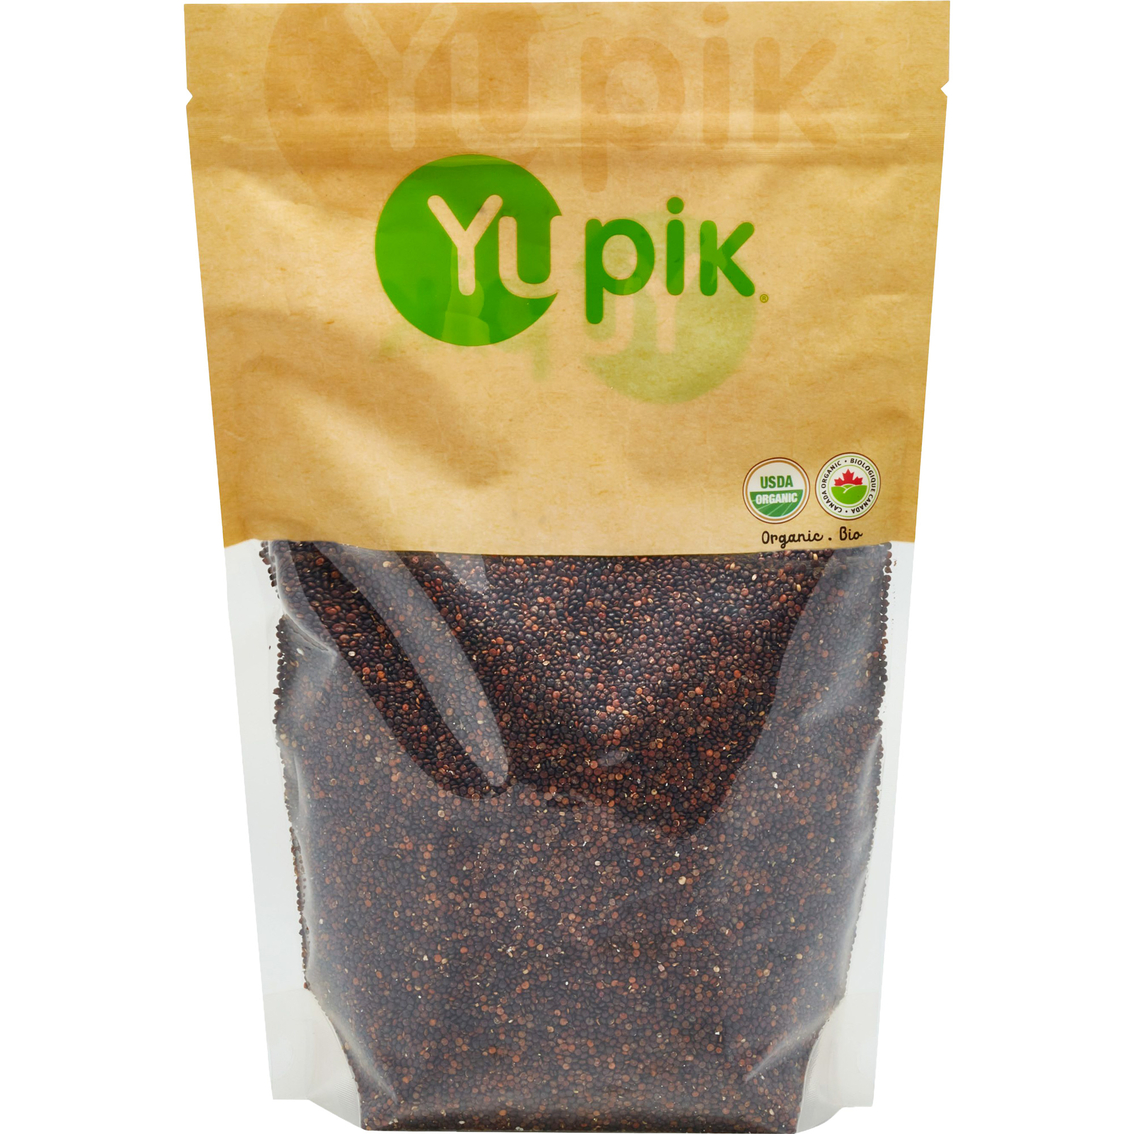 Yupik Organic Black Quinoa, Gluten Free, GMO Free, Vegan 6 bags, 2.2 lb. each